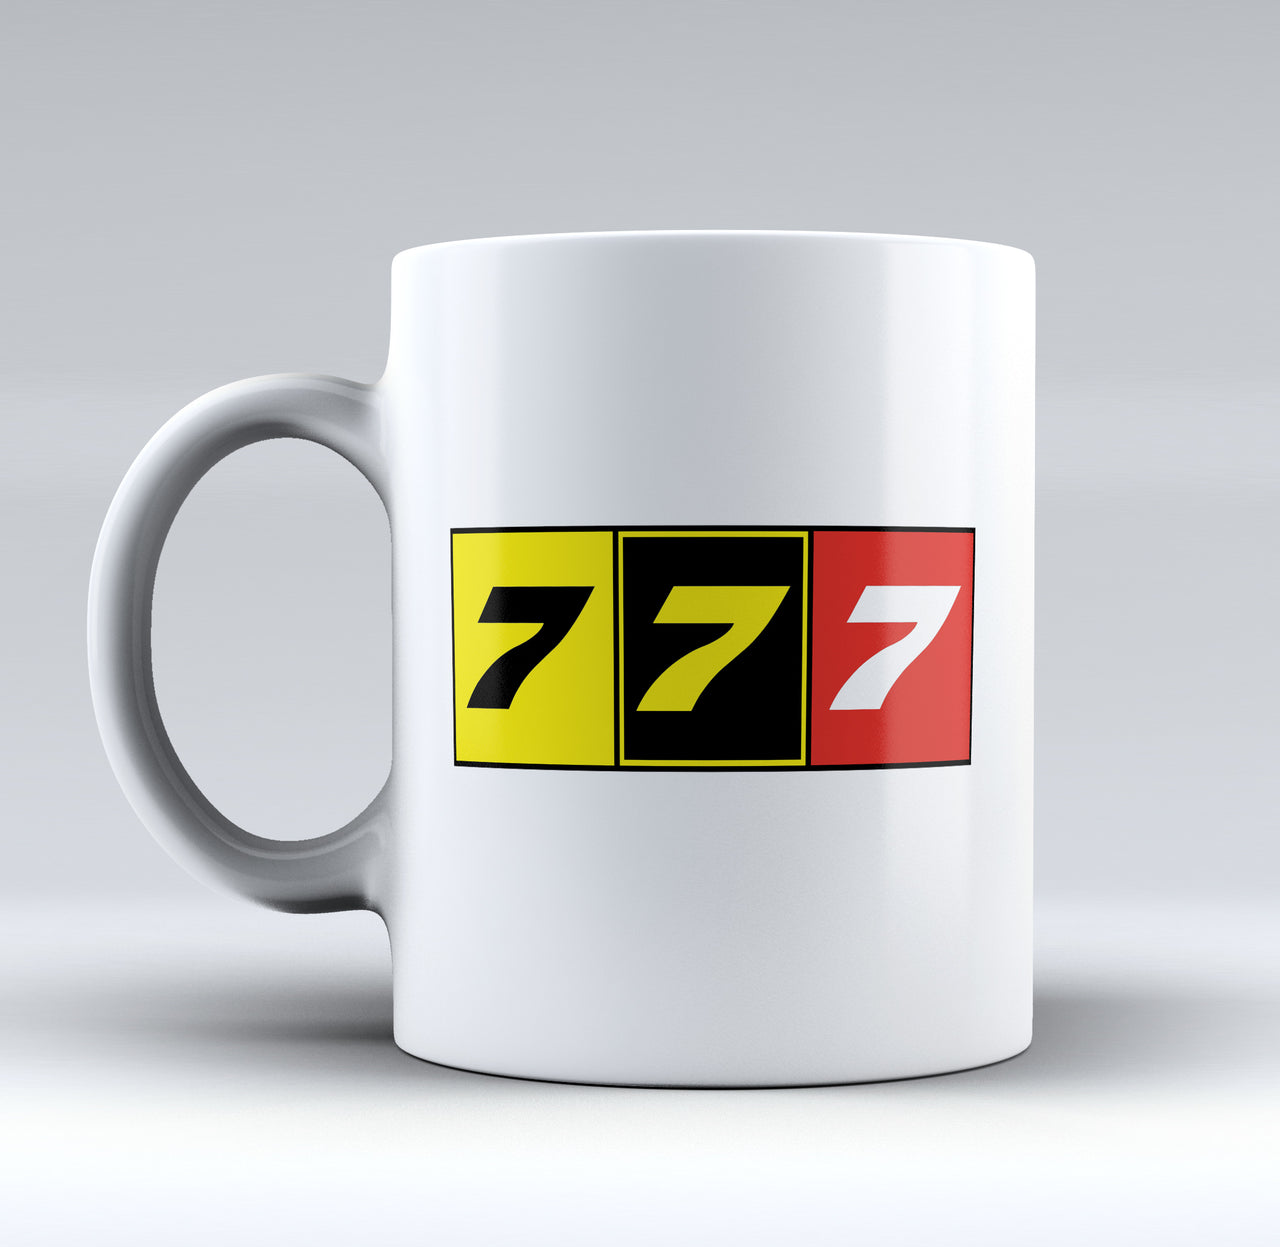 Flat Colourful 777 Designed Mugs